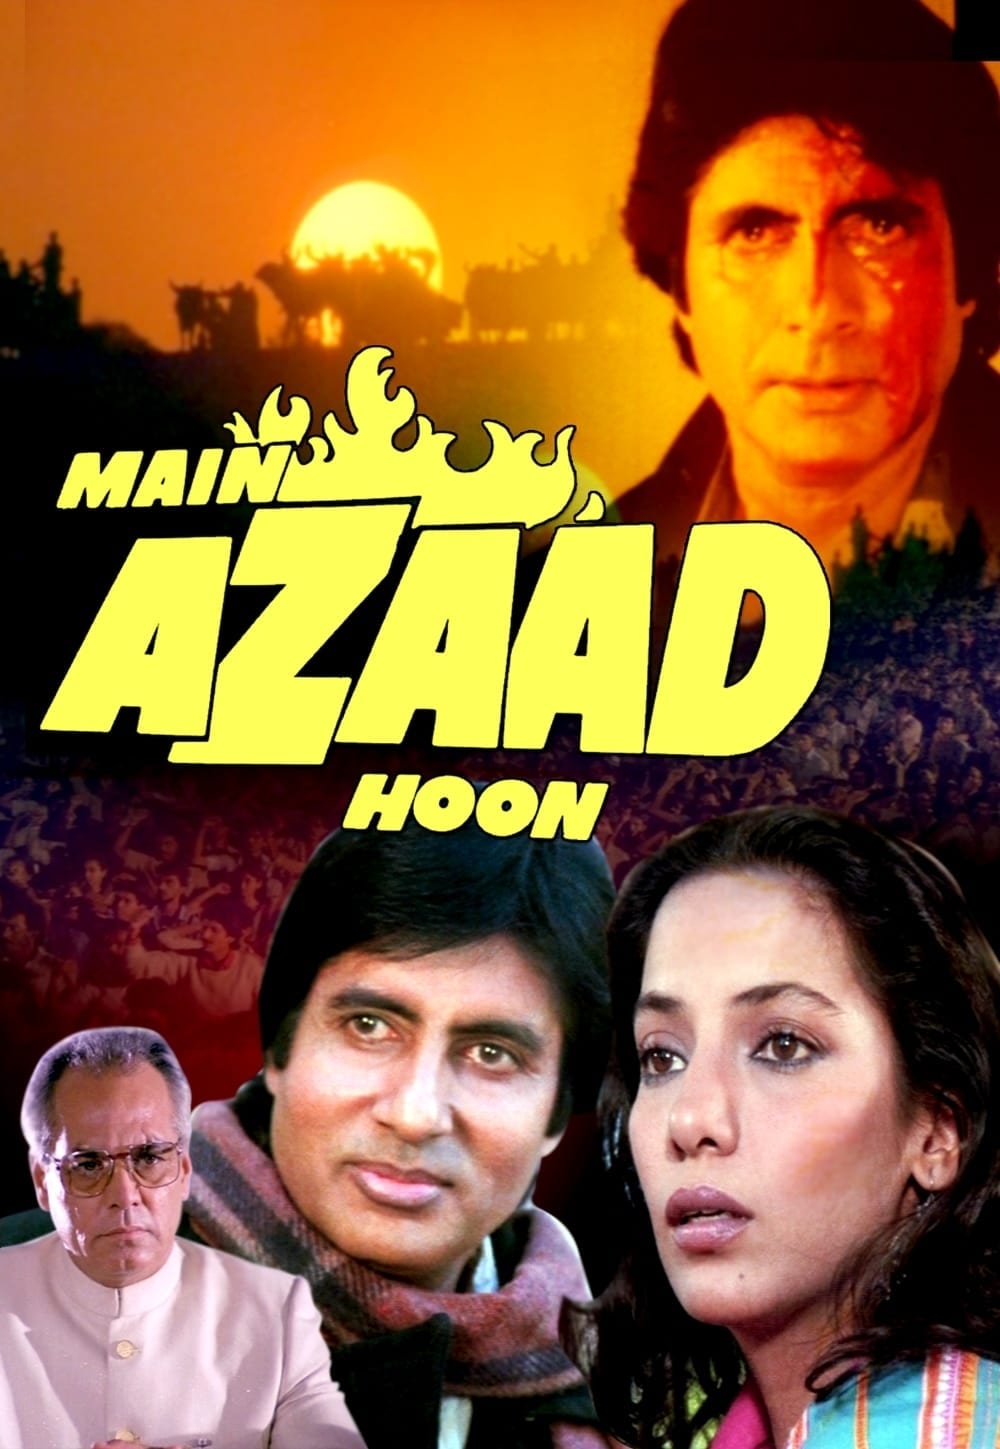 Poster for the movie "Main Azaad Hoon"